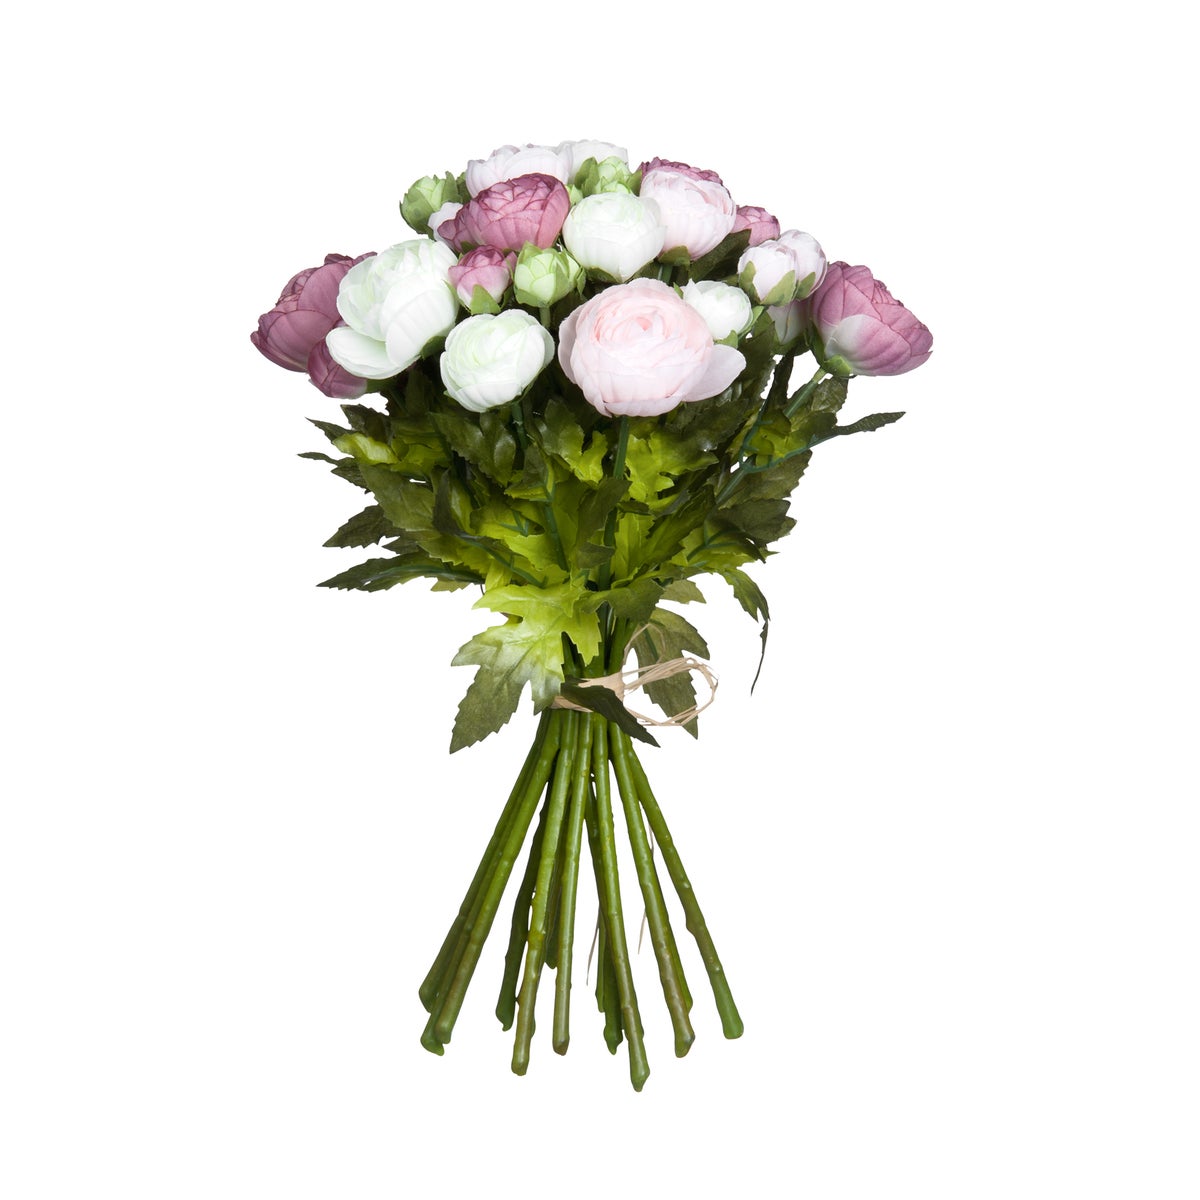 Bouquet ranunculus pink - 13.75x10.25"